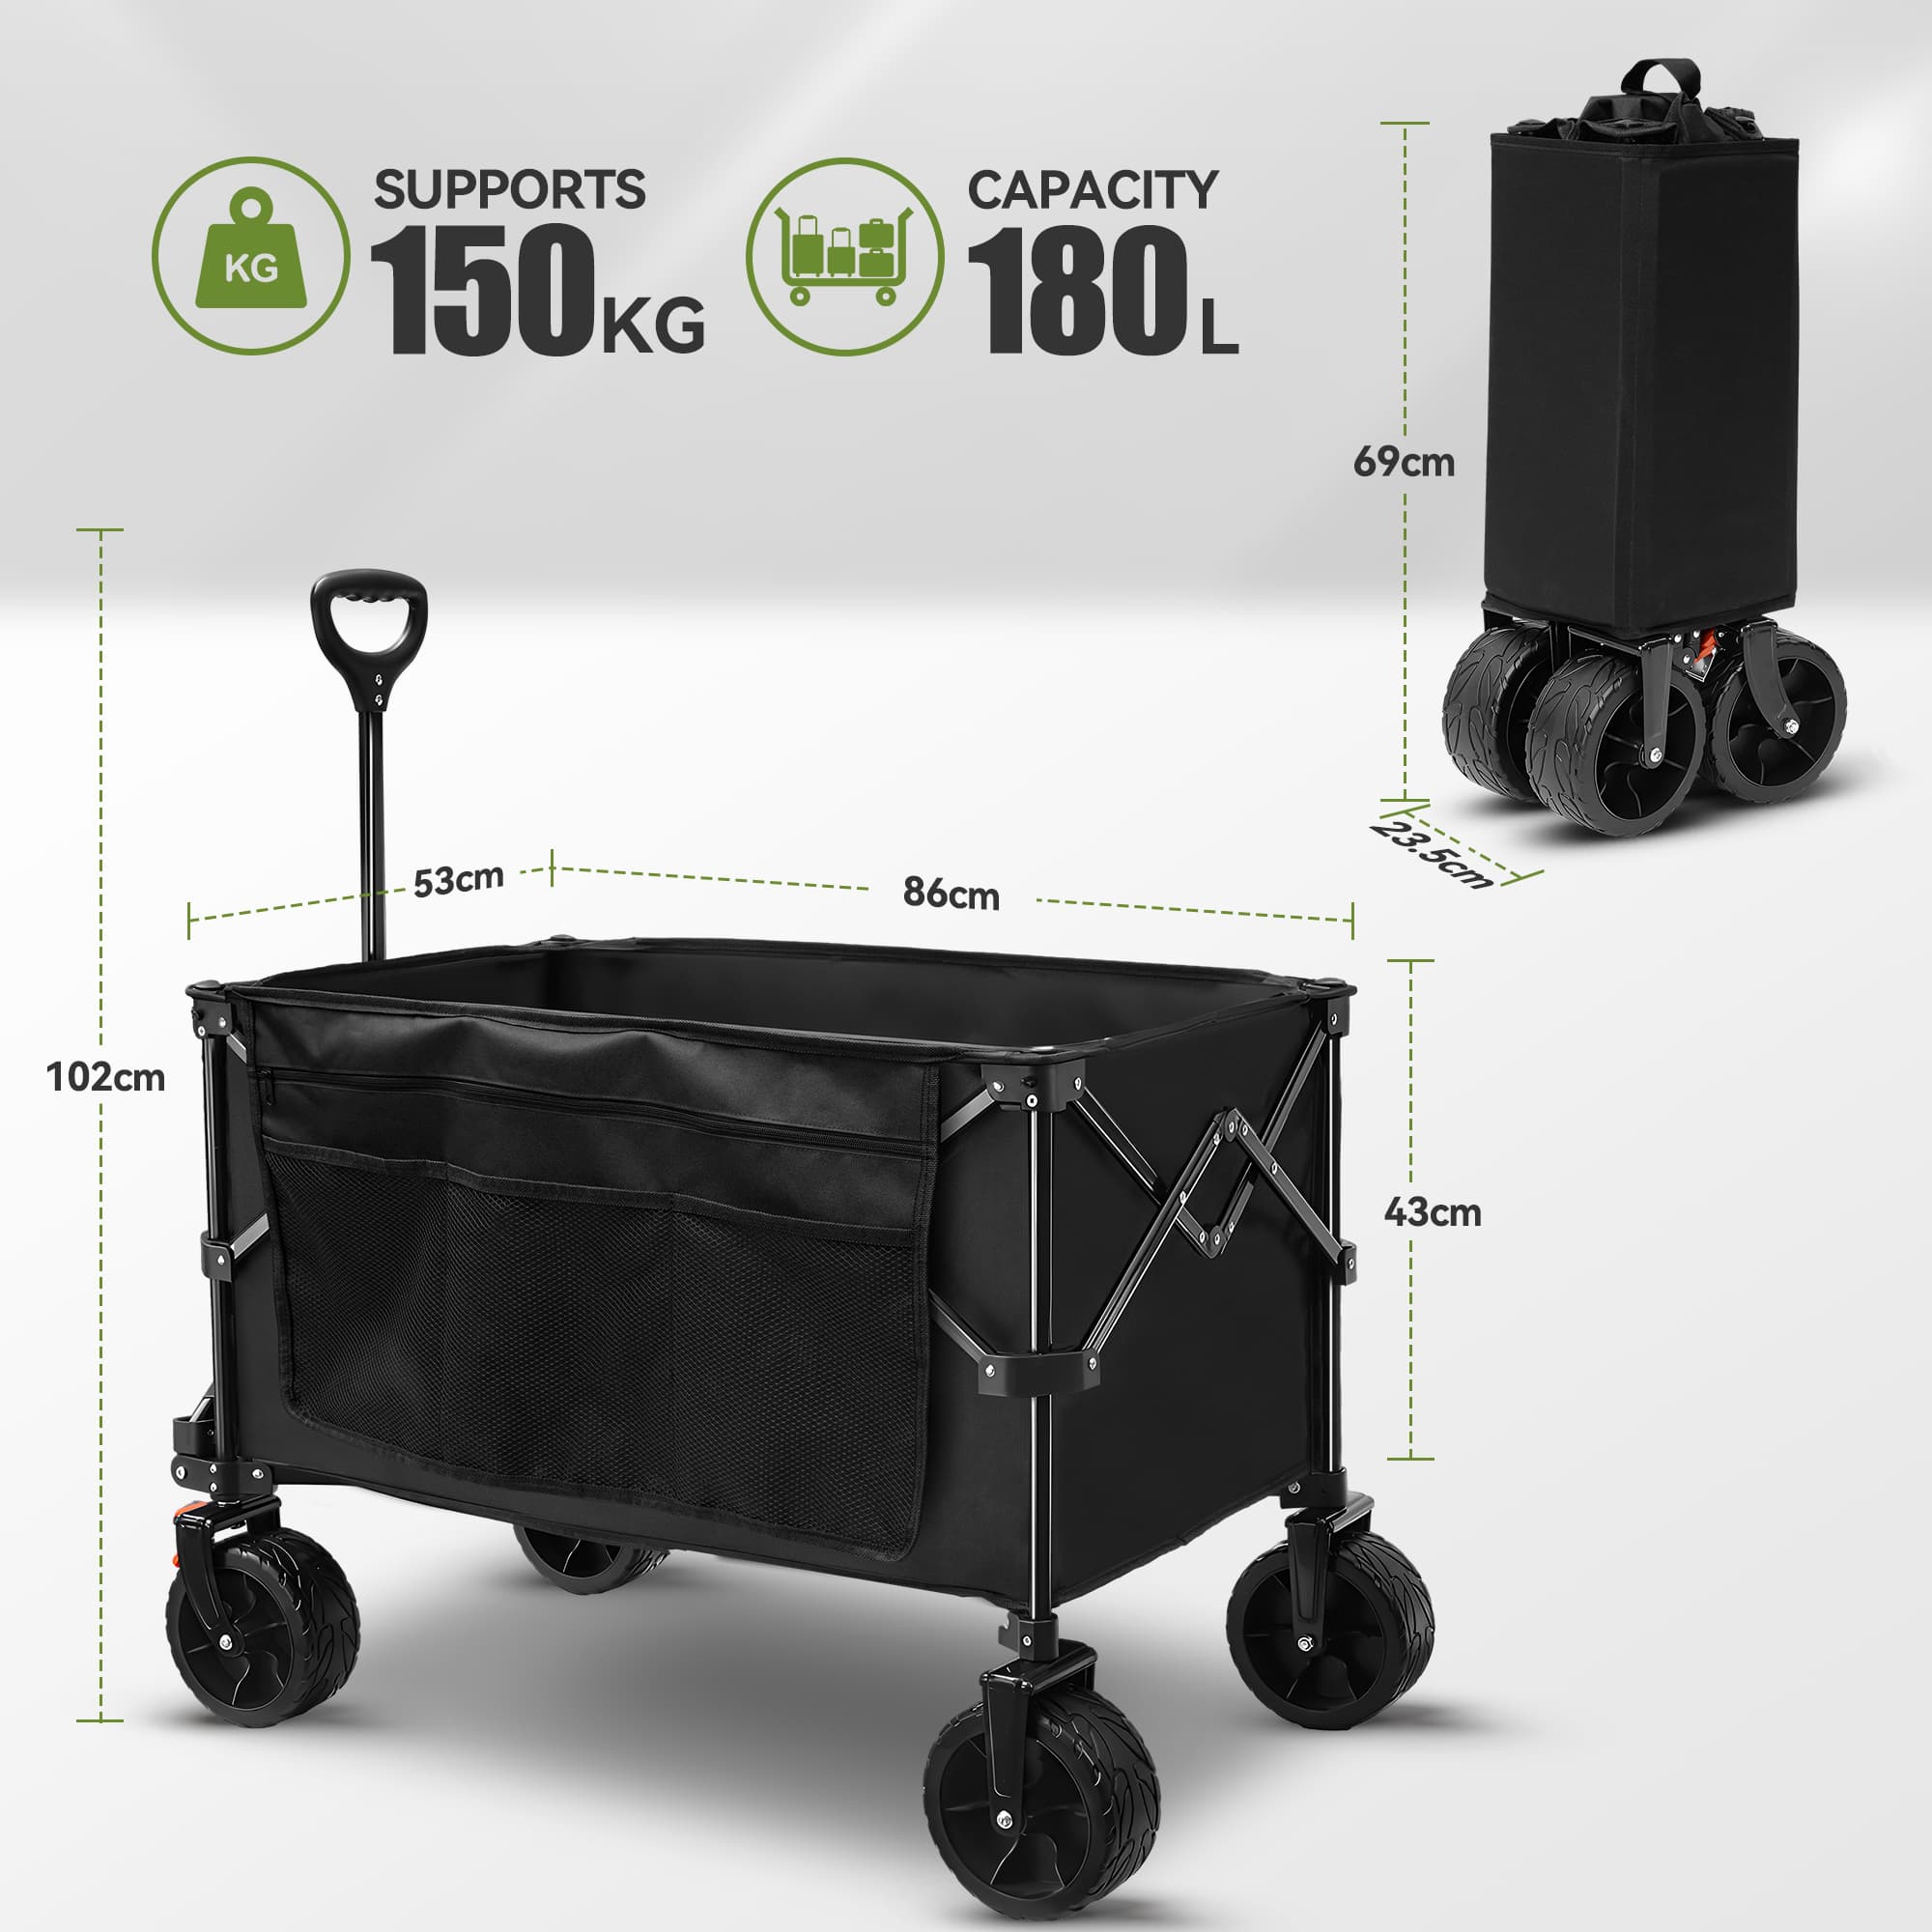 TECKNET Folding Trolley Cart, Detachable Wagon Cart for Camping Garden Picnic Beach Max Load 180L/150kg